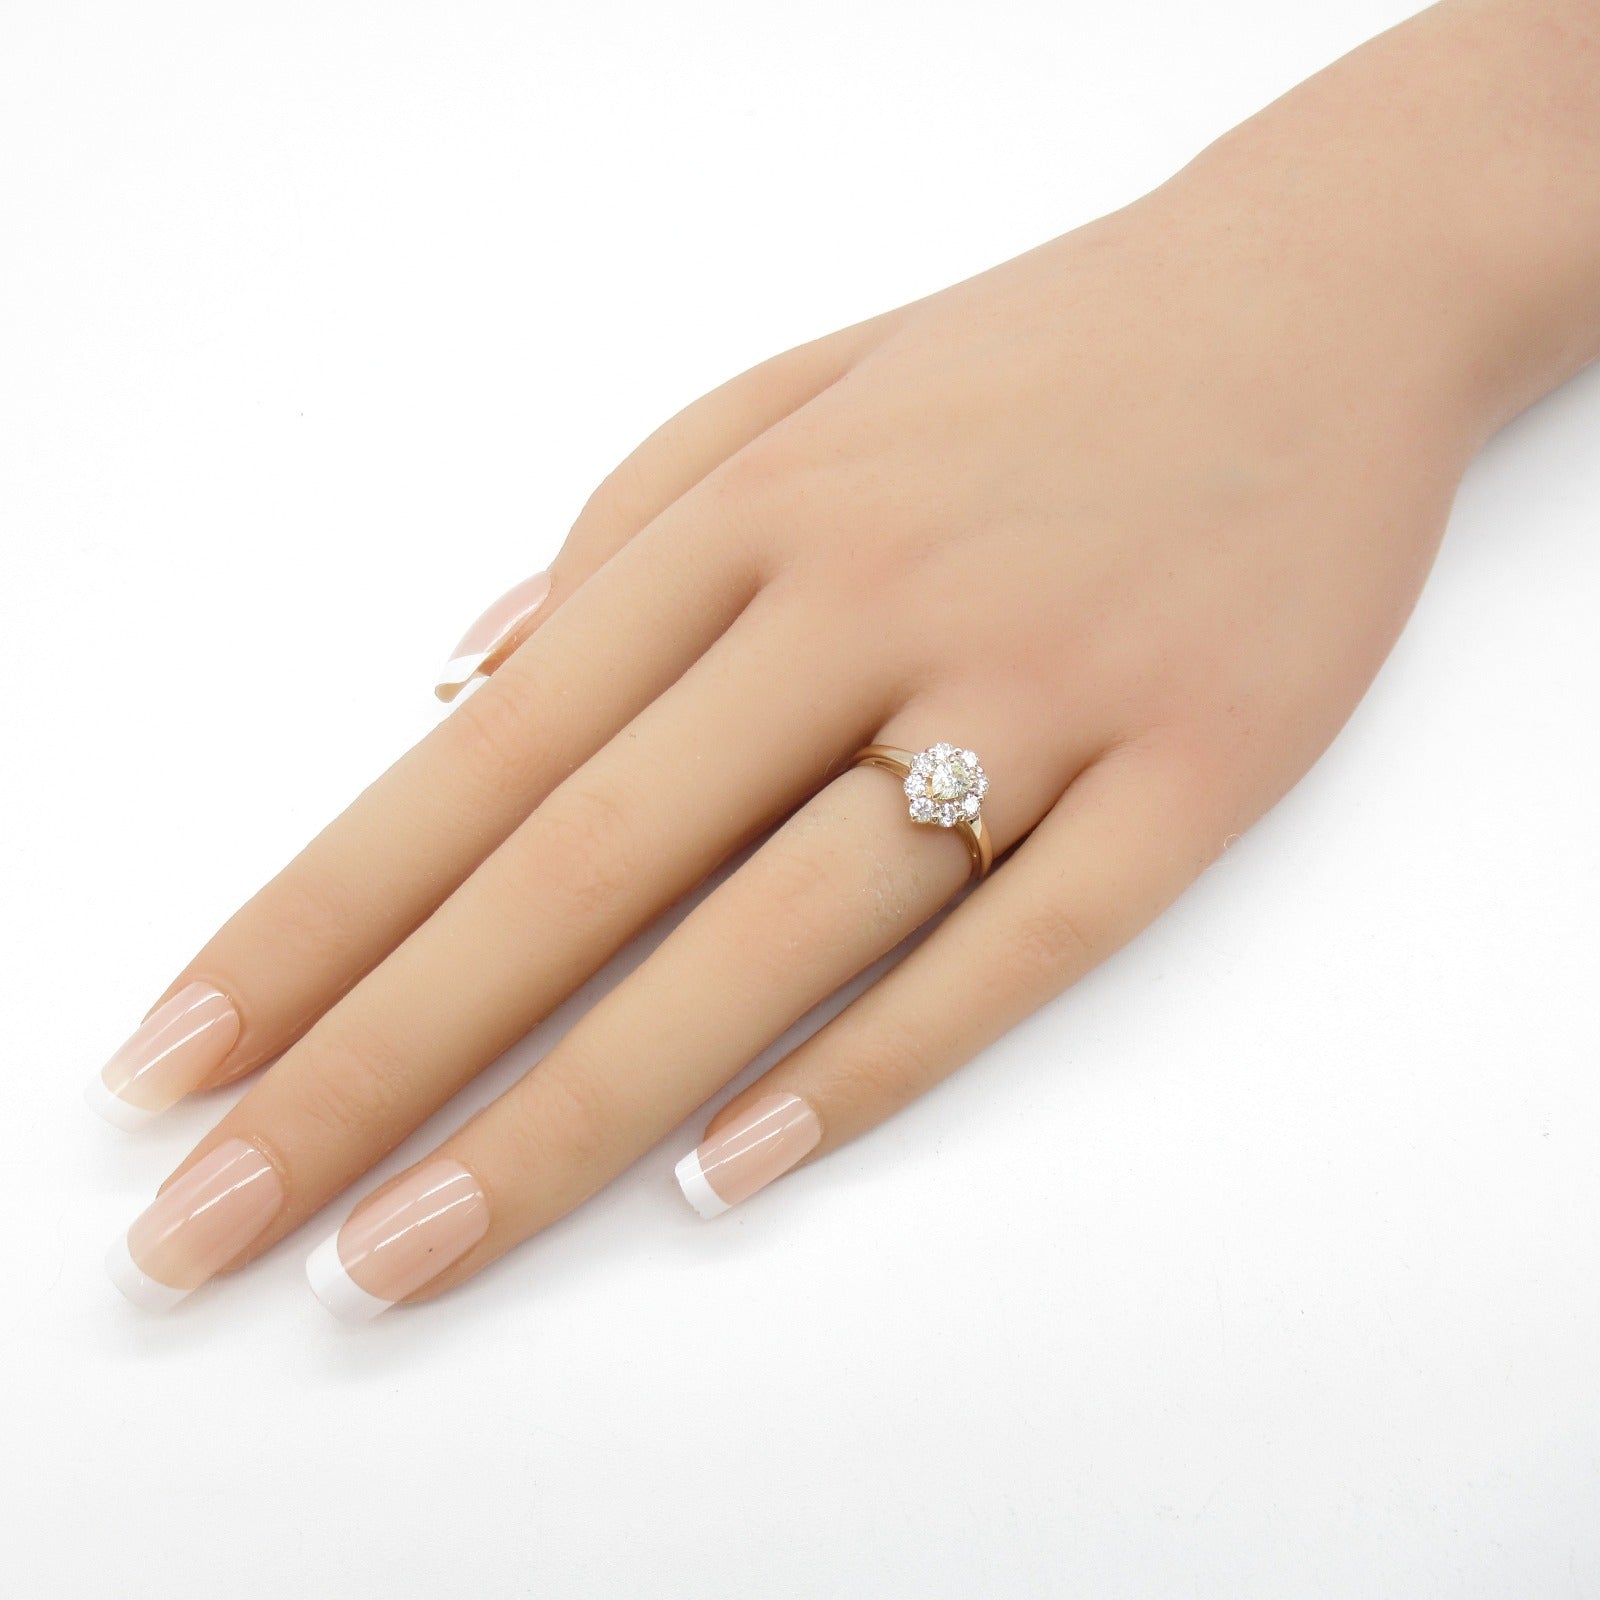 Jewelry Jewelry Diamond Ring Ring Ring Jewelry K18 (yellow g) Diamond  Clear Diamond 2.8g